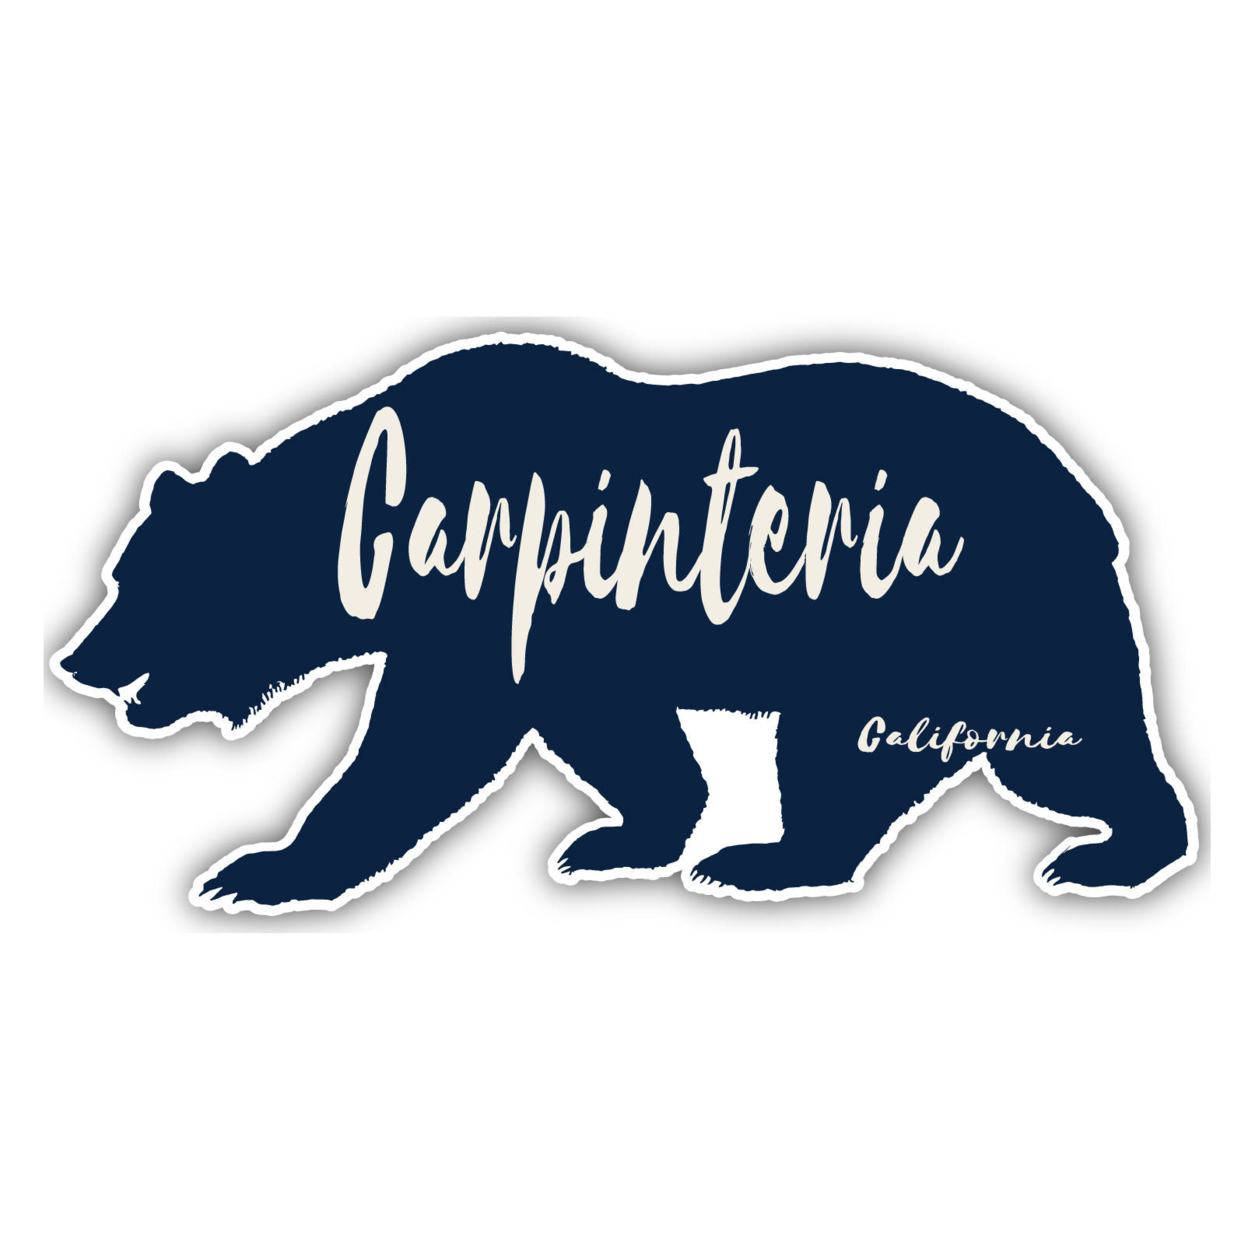 Carpinteria California Souvenir Decorative Stickers (Choose Theme And Size) - Single Unit, 10-Inch, Bear